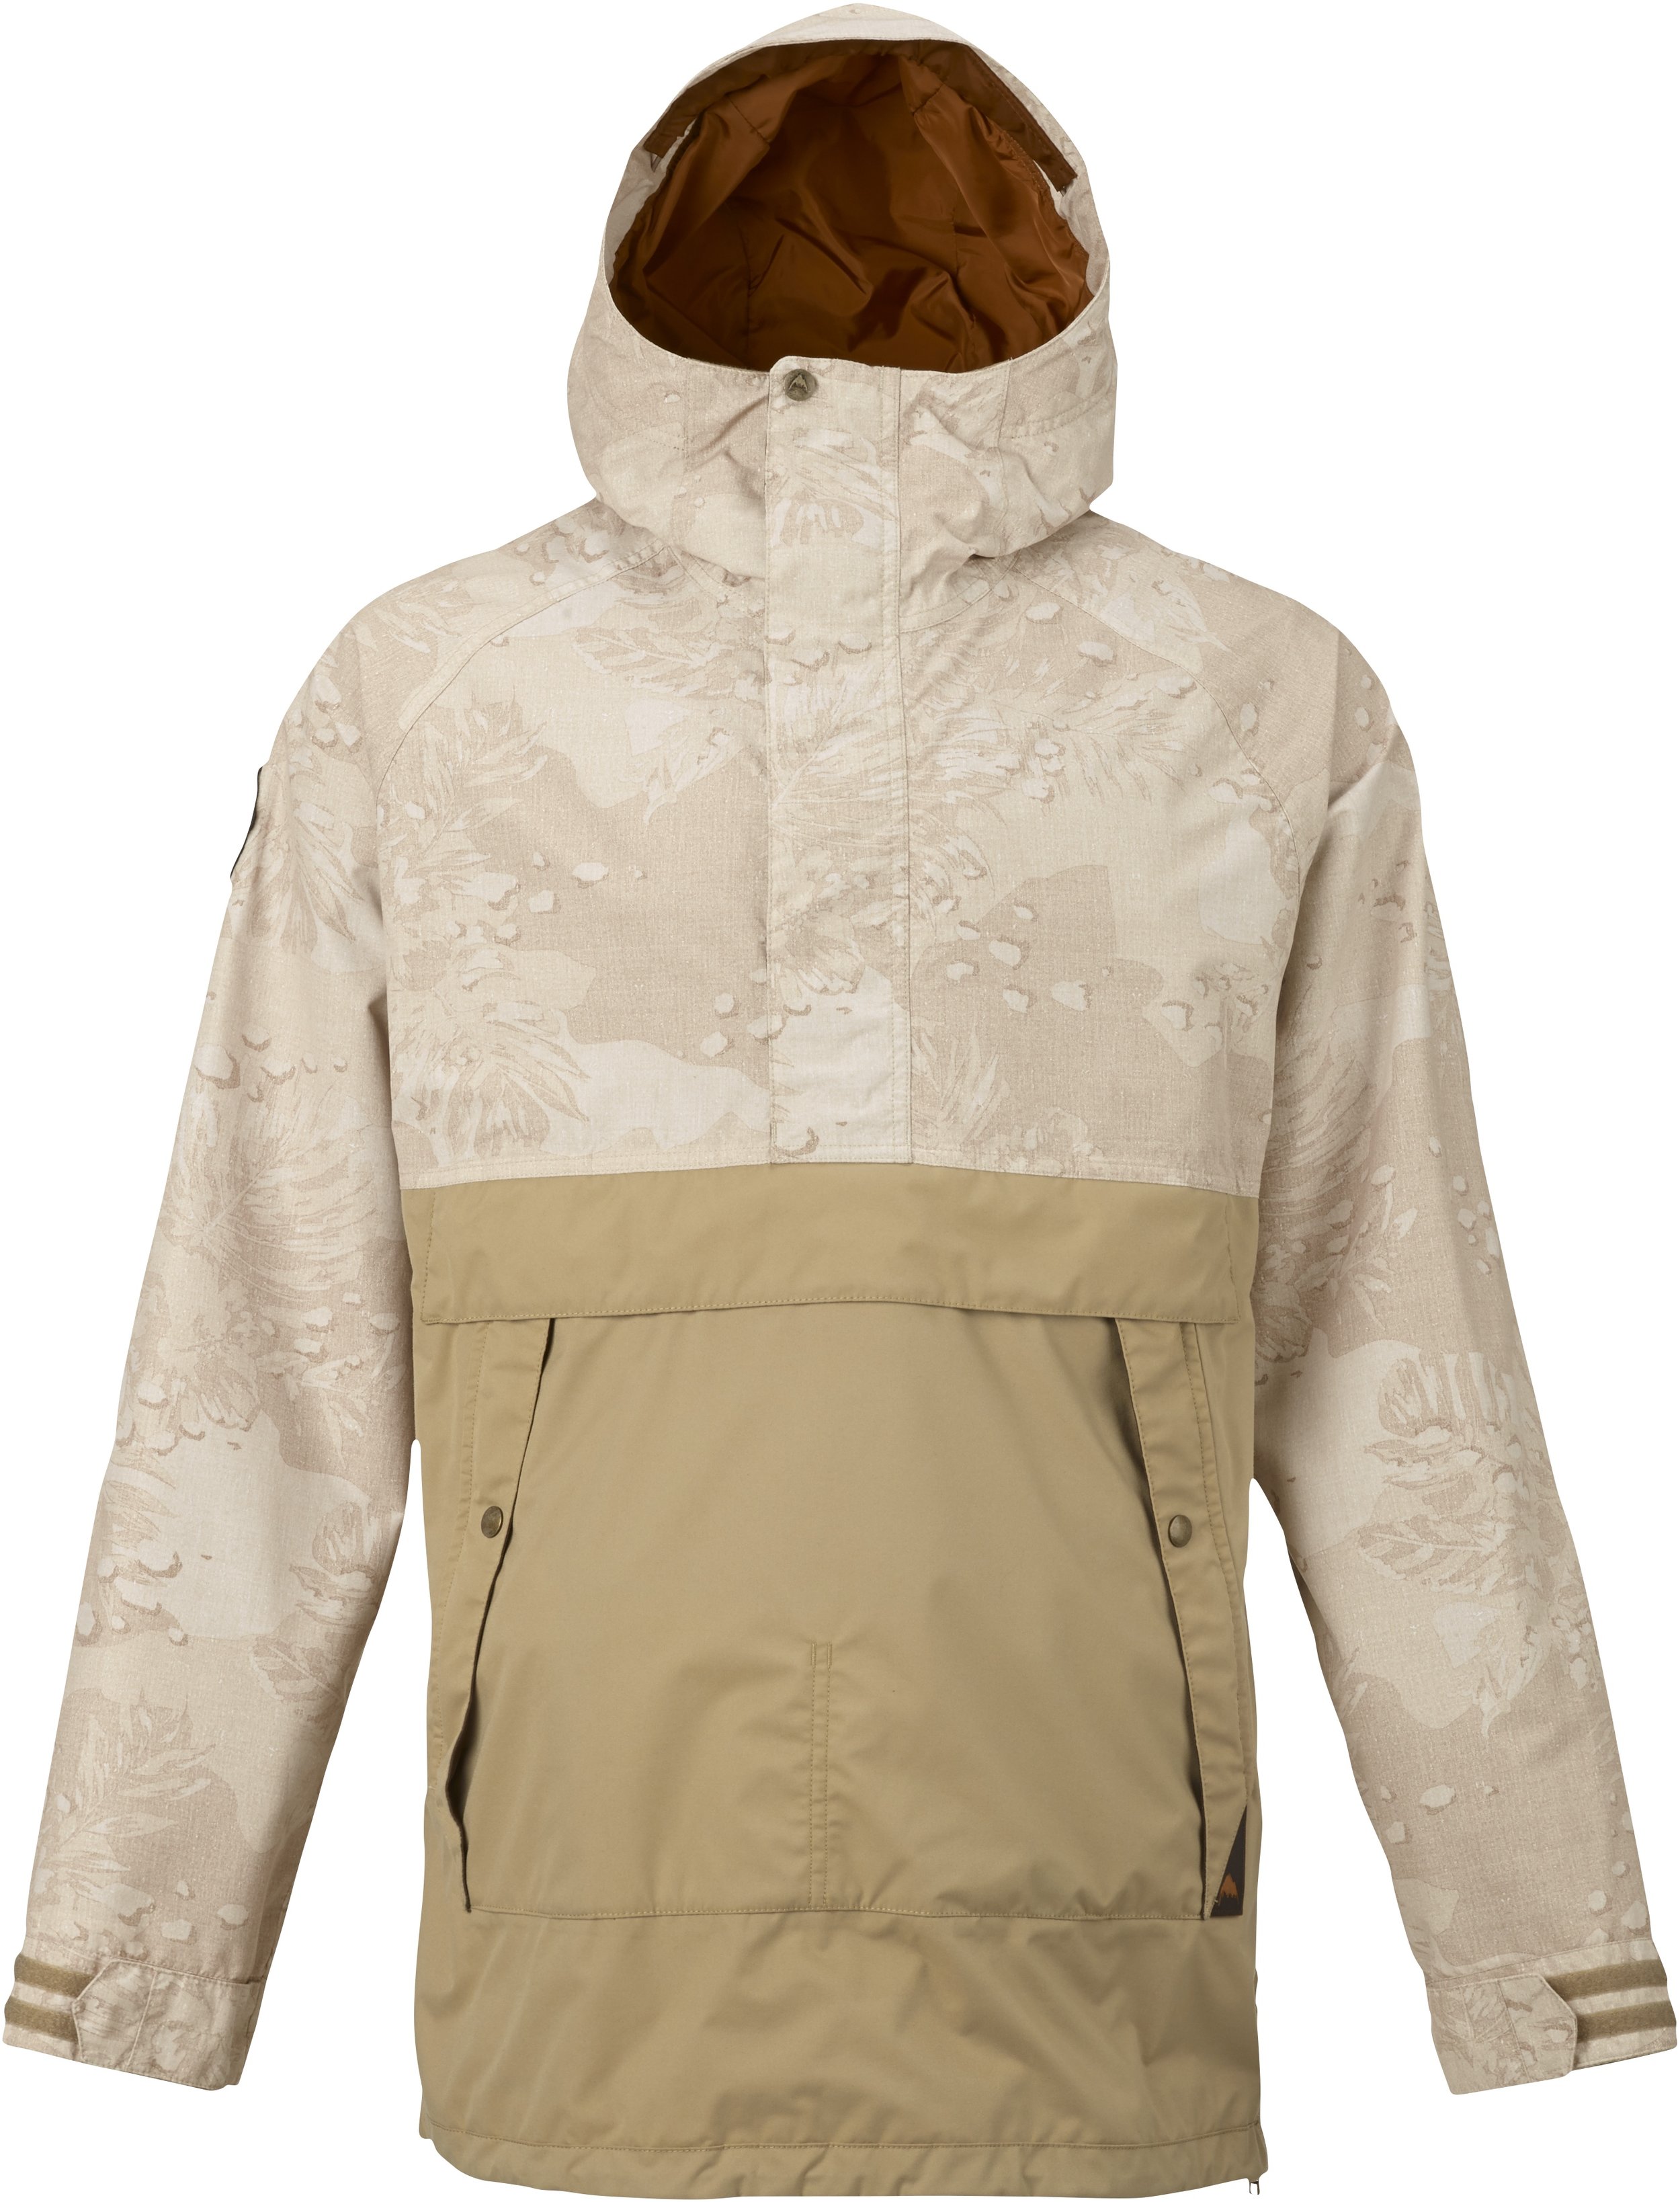 Burton Rambler Anorak Jacket at Amazon Fashion, $219.95